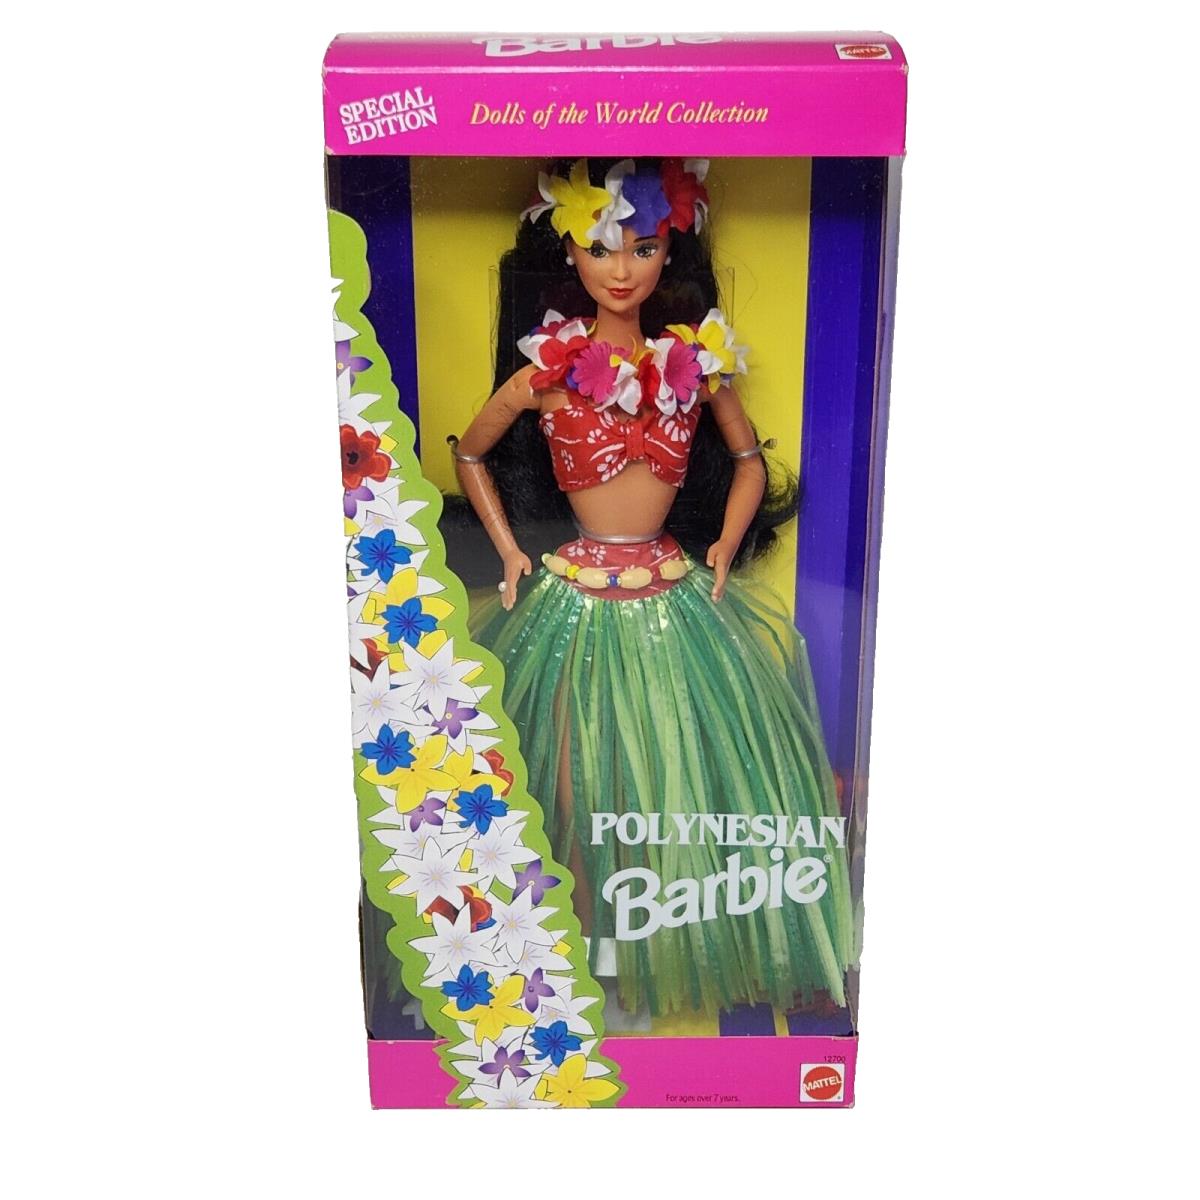 Vintage 1994 Mattel Polynesian Barbie Doll OF The World Box 12700